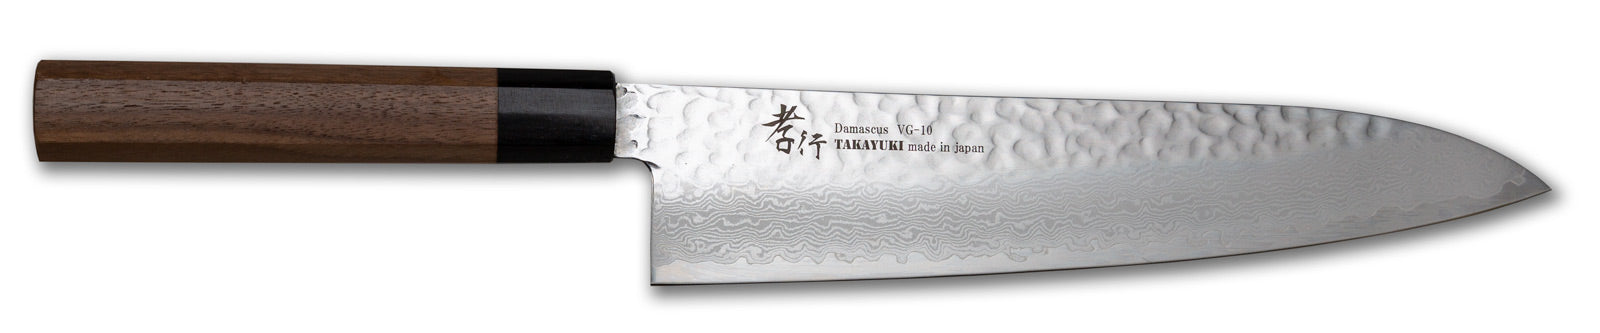 Sakai Takayuki 33-Layer Damascus Chef's Knife, 240mm / 9.5", Walnut Wood Handle